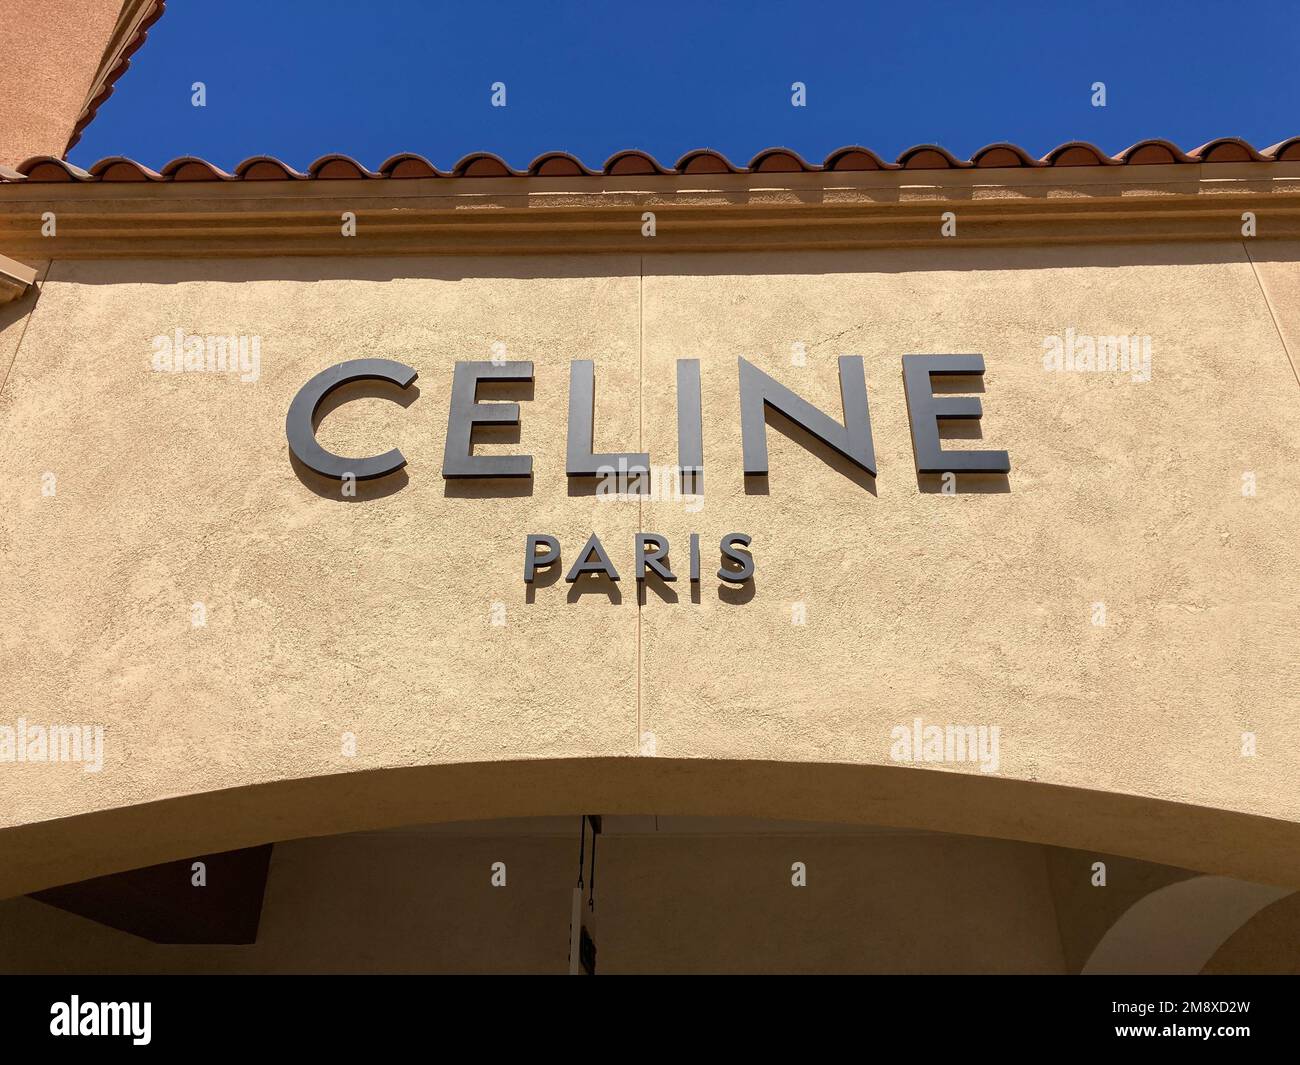 Celine Paris sign, logo on the store facade at Desert Hills